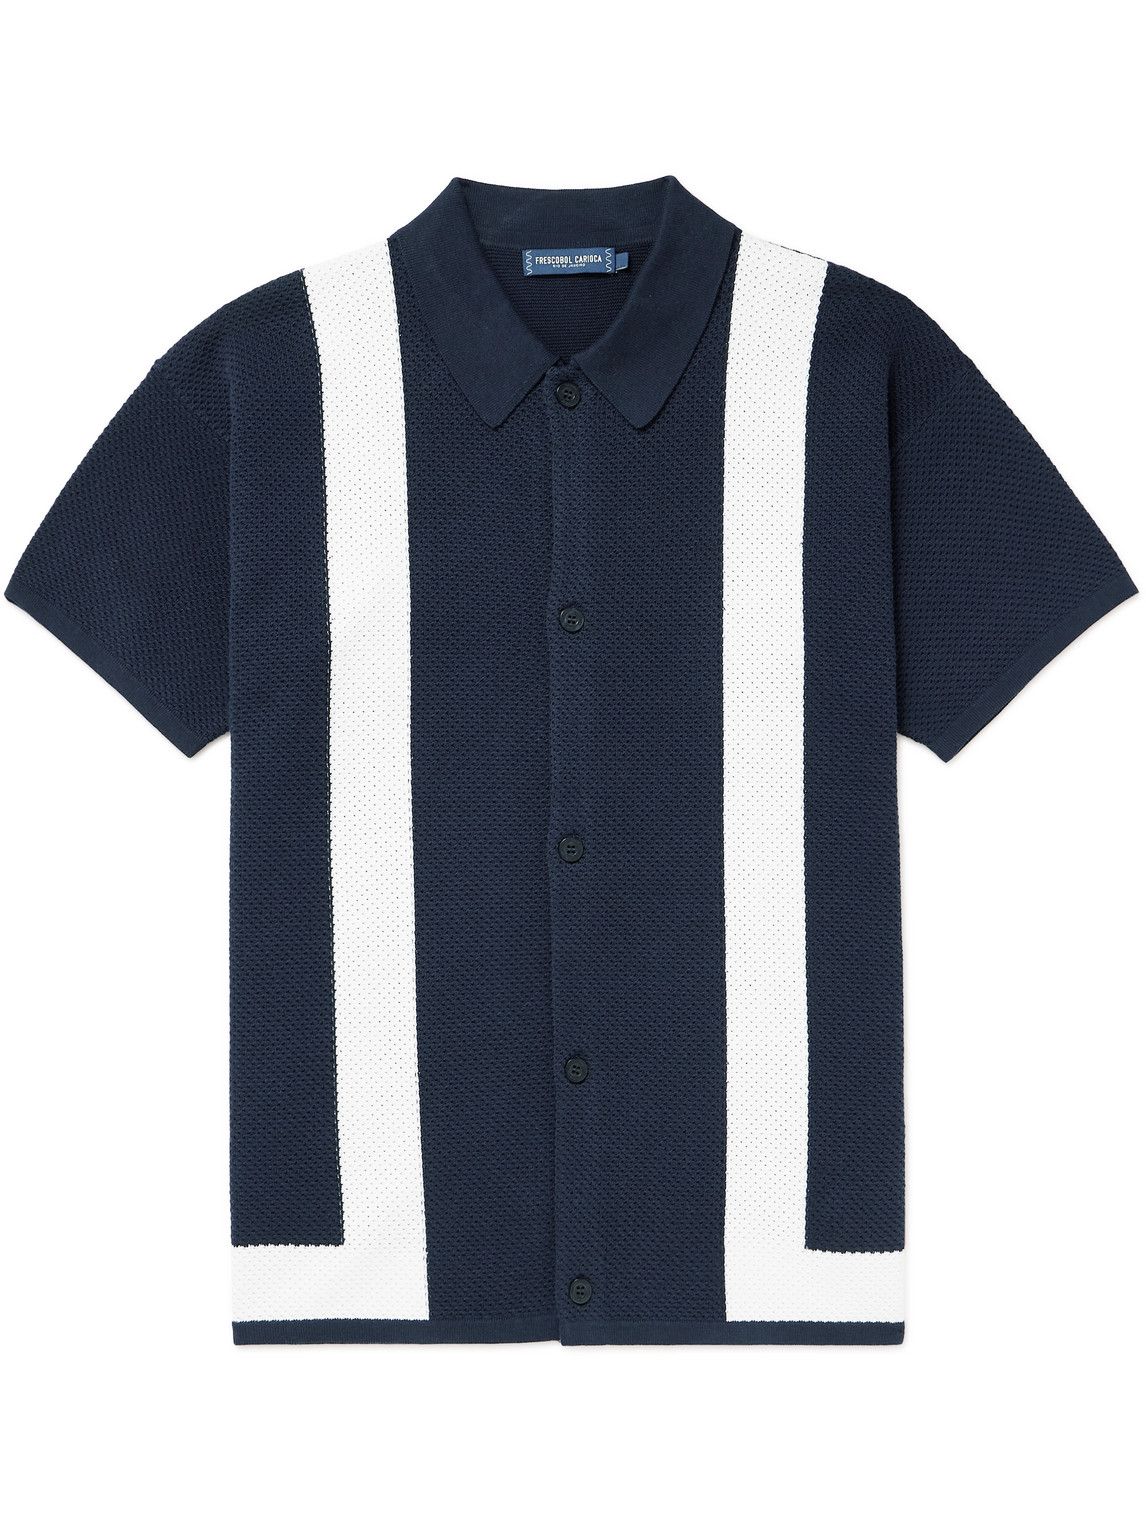 Frescobol Carioca - Barretos Striped Knitted Cotton Shirt - Men - Blue - XXL von Frescobol Carioca